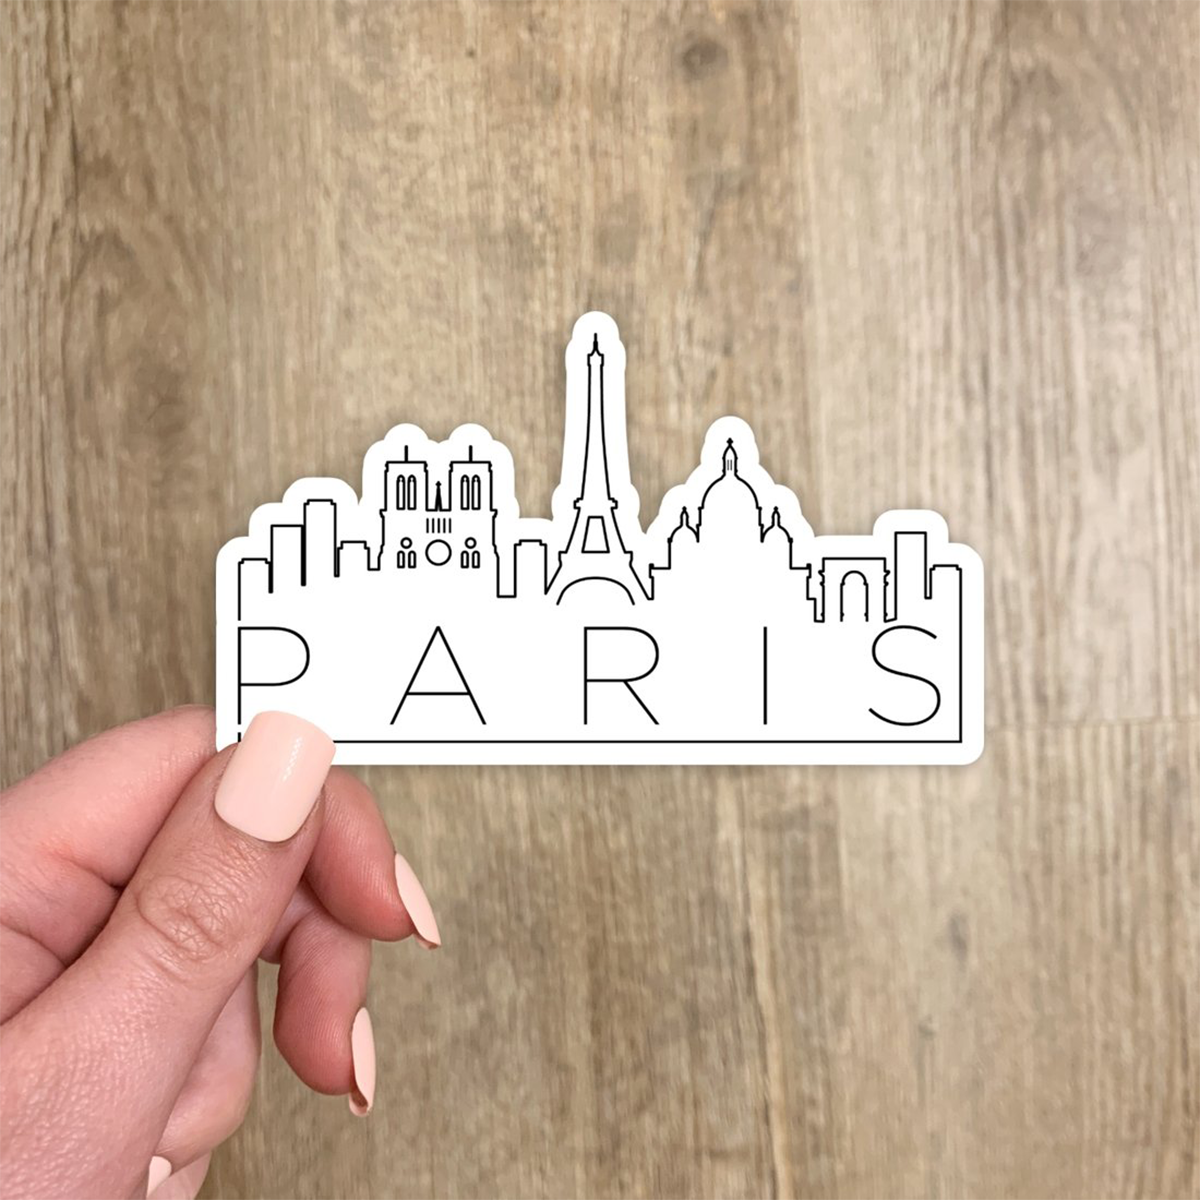 Paris Skyline Sticker